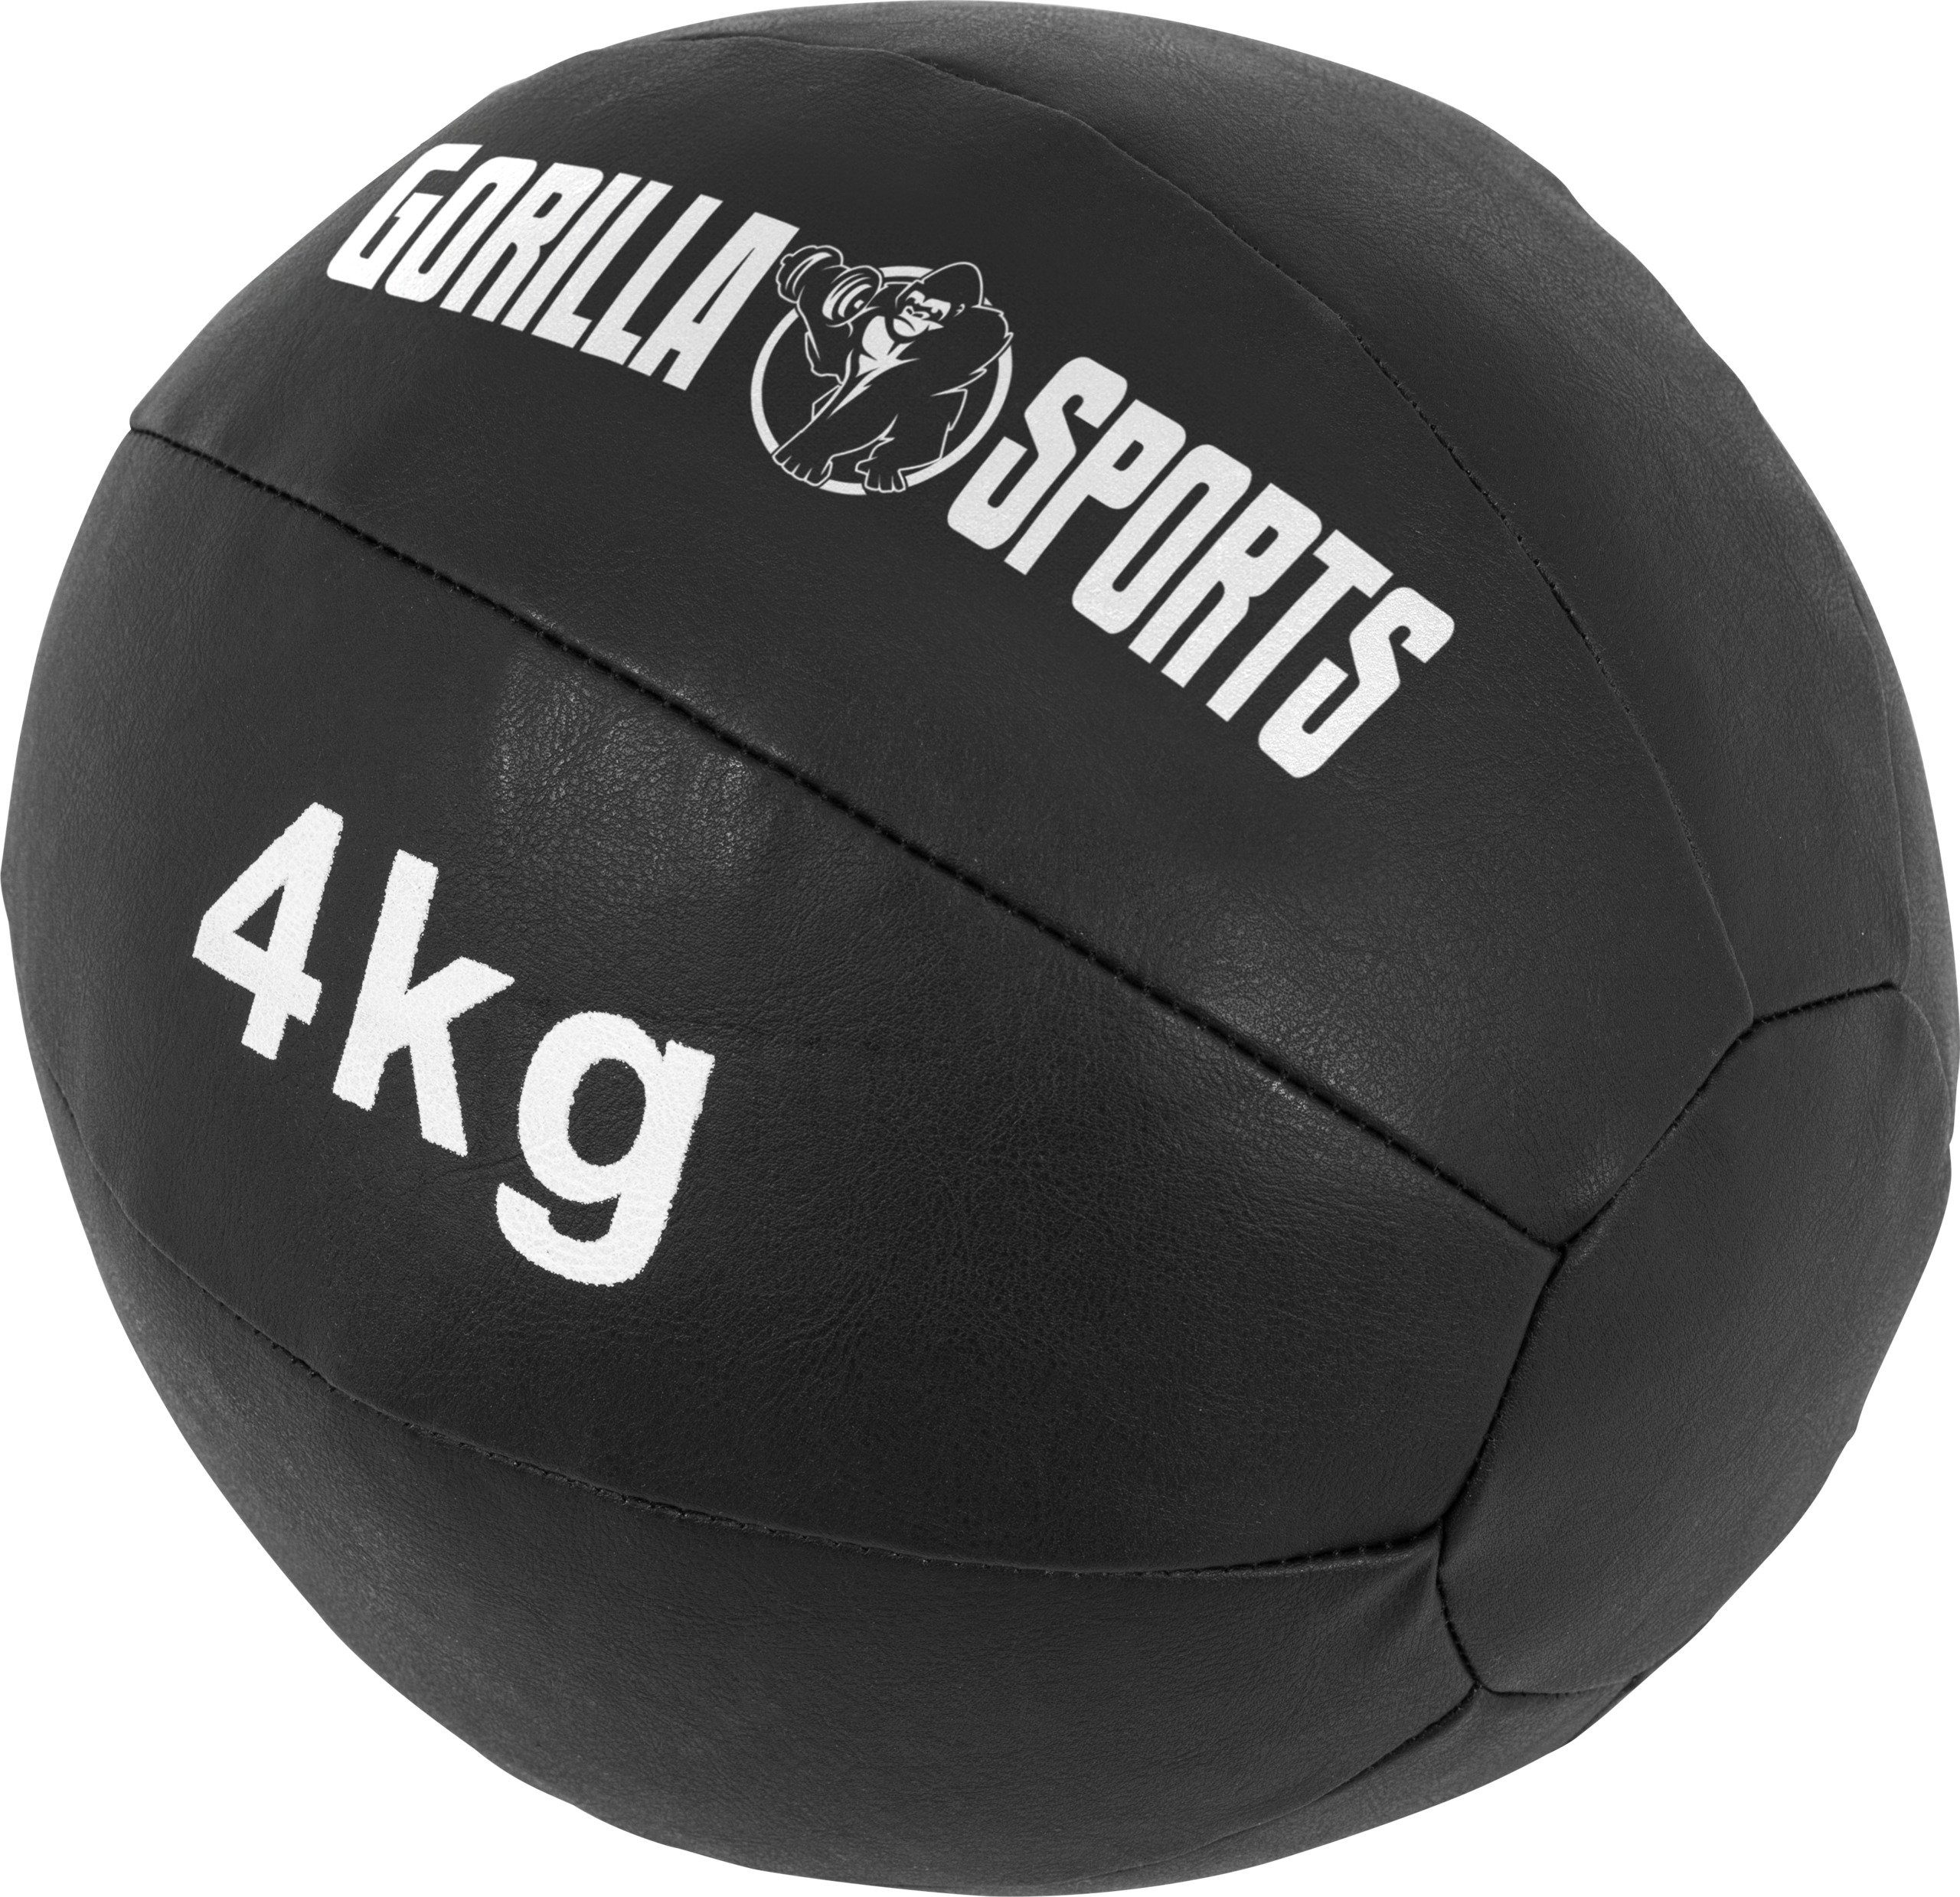 GORILLA SPORTS Medizinball Einzeln/Set, 29cm, Gewichtsball Fitnessball, Trainingsball, Leder, kg aus 4